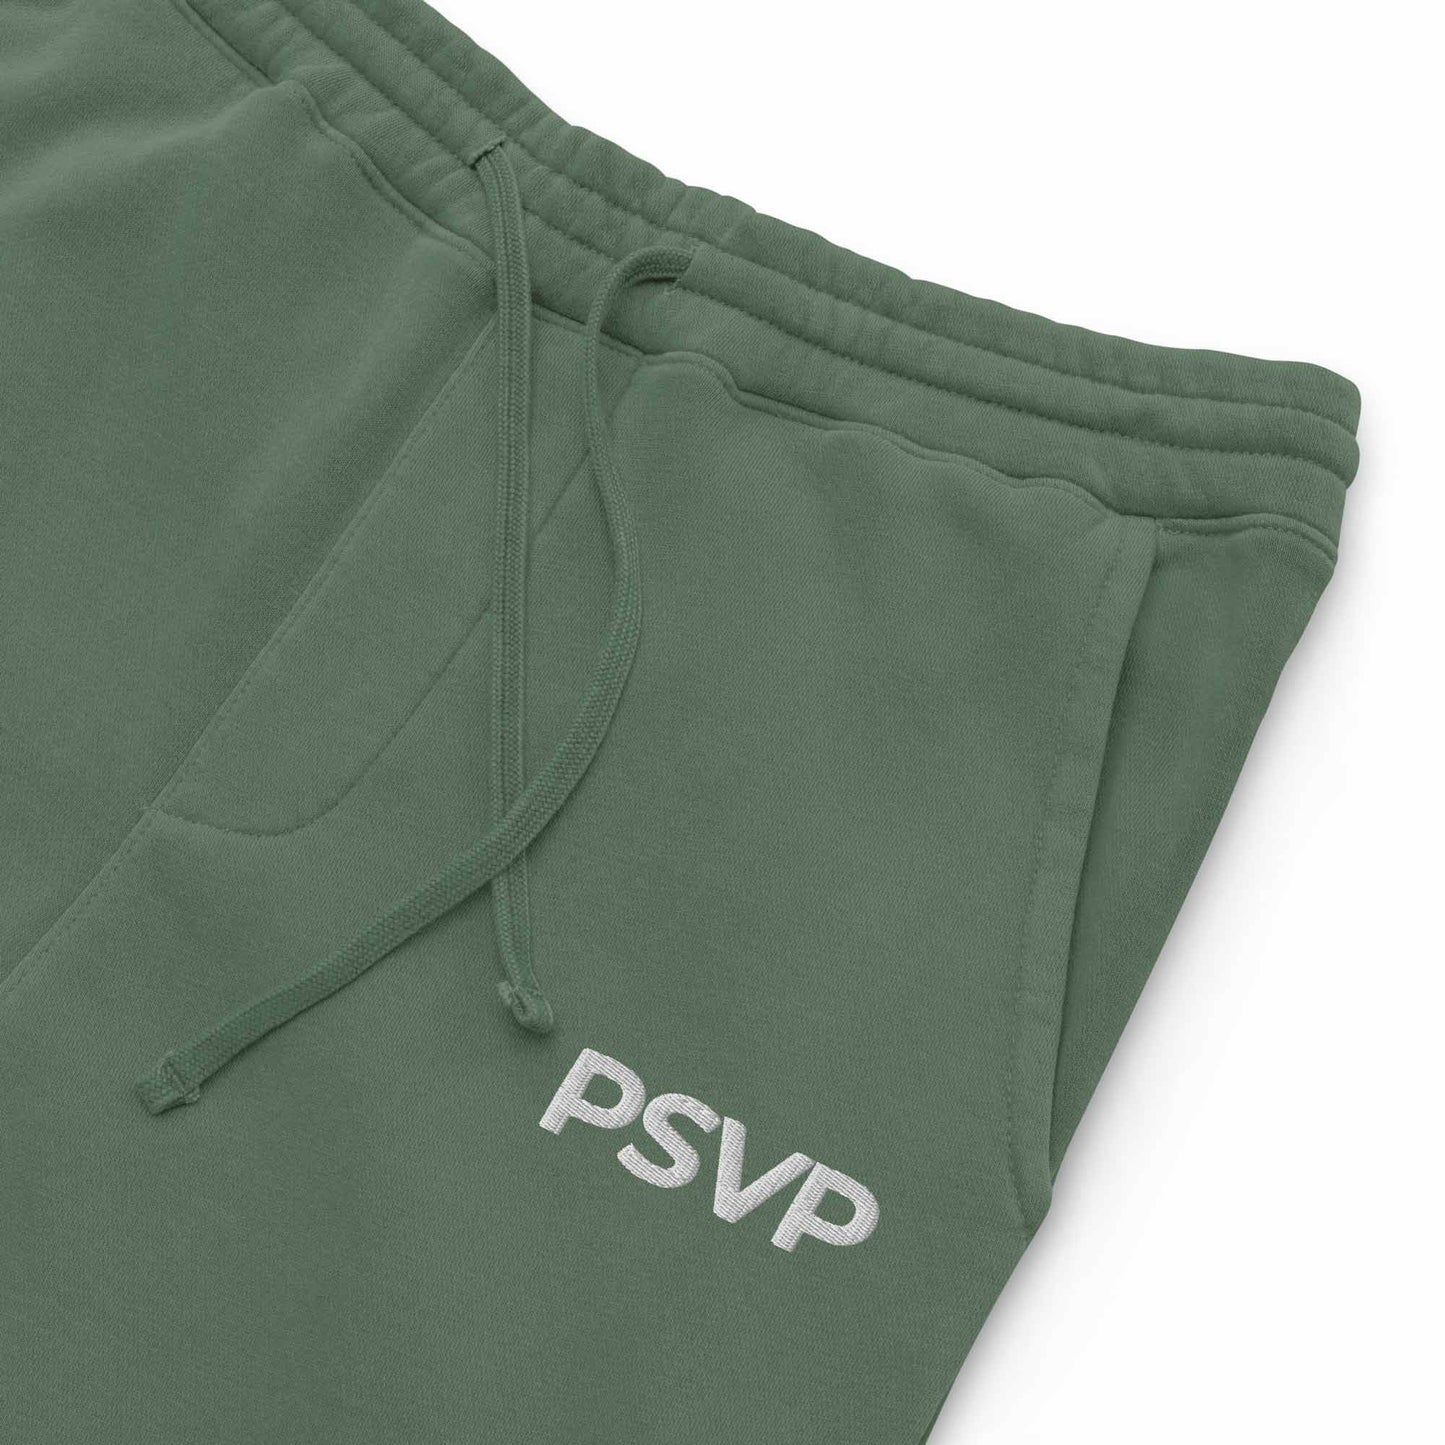 PSVP Pigment-Dyed Alpine Green Sweatpants - Embroidery | Sweatpants | PARADIS SVP